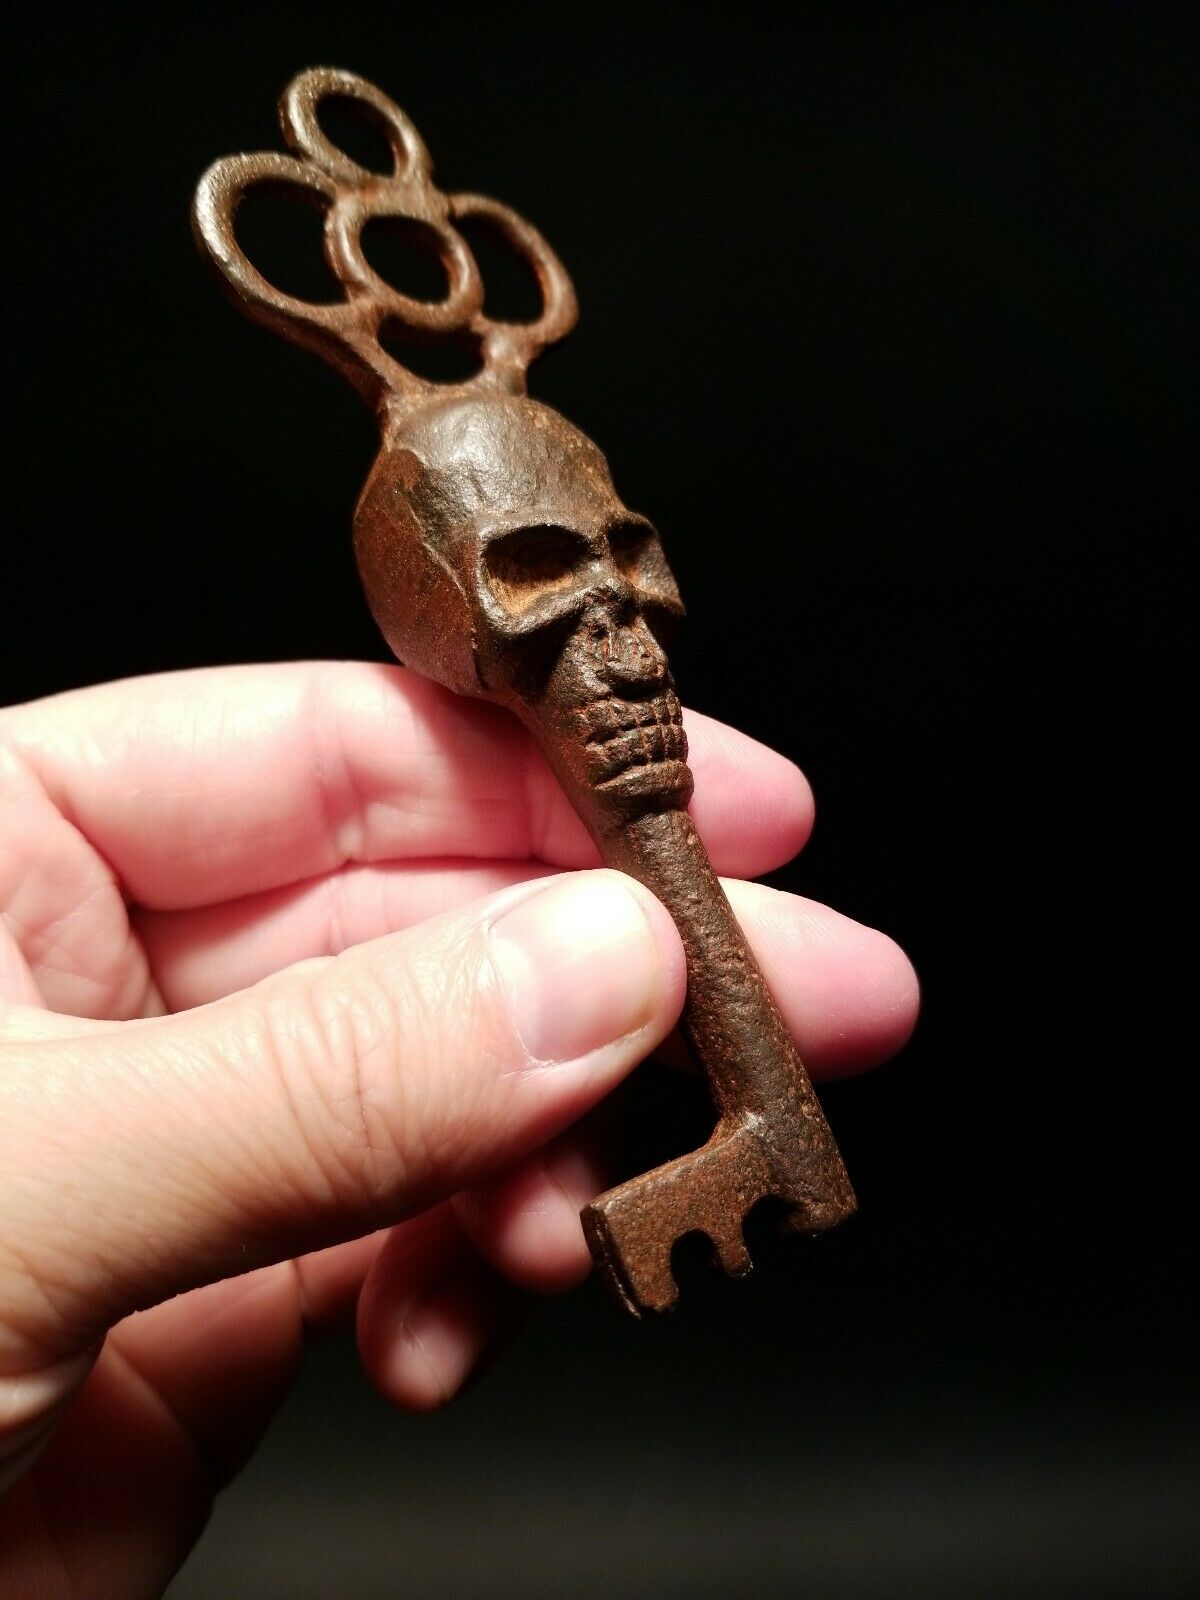 Antique Vintage Style Cast Iron Skull Skeleton Key - Early Home Decor